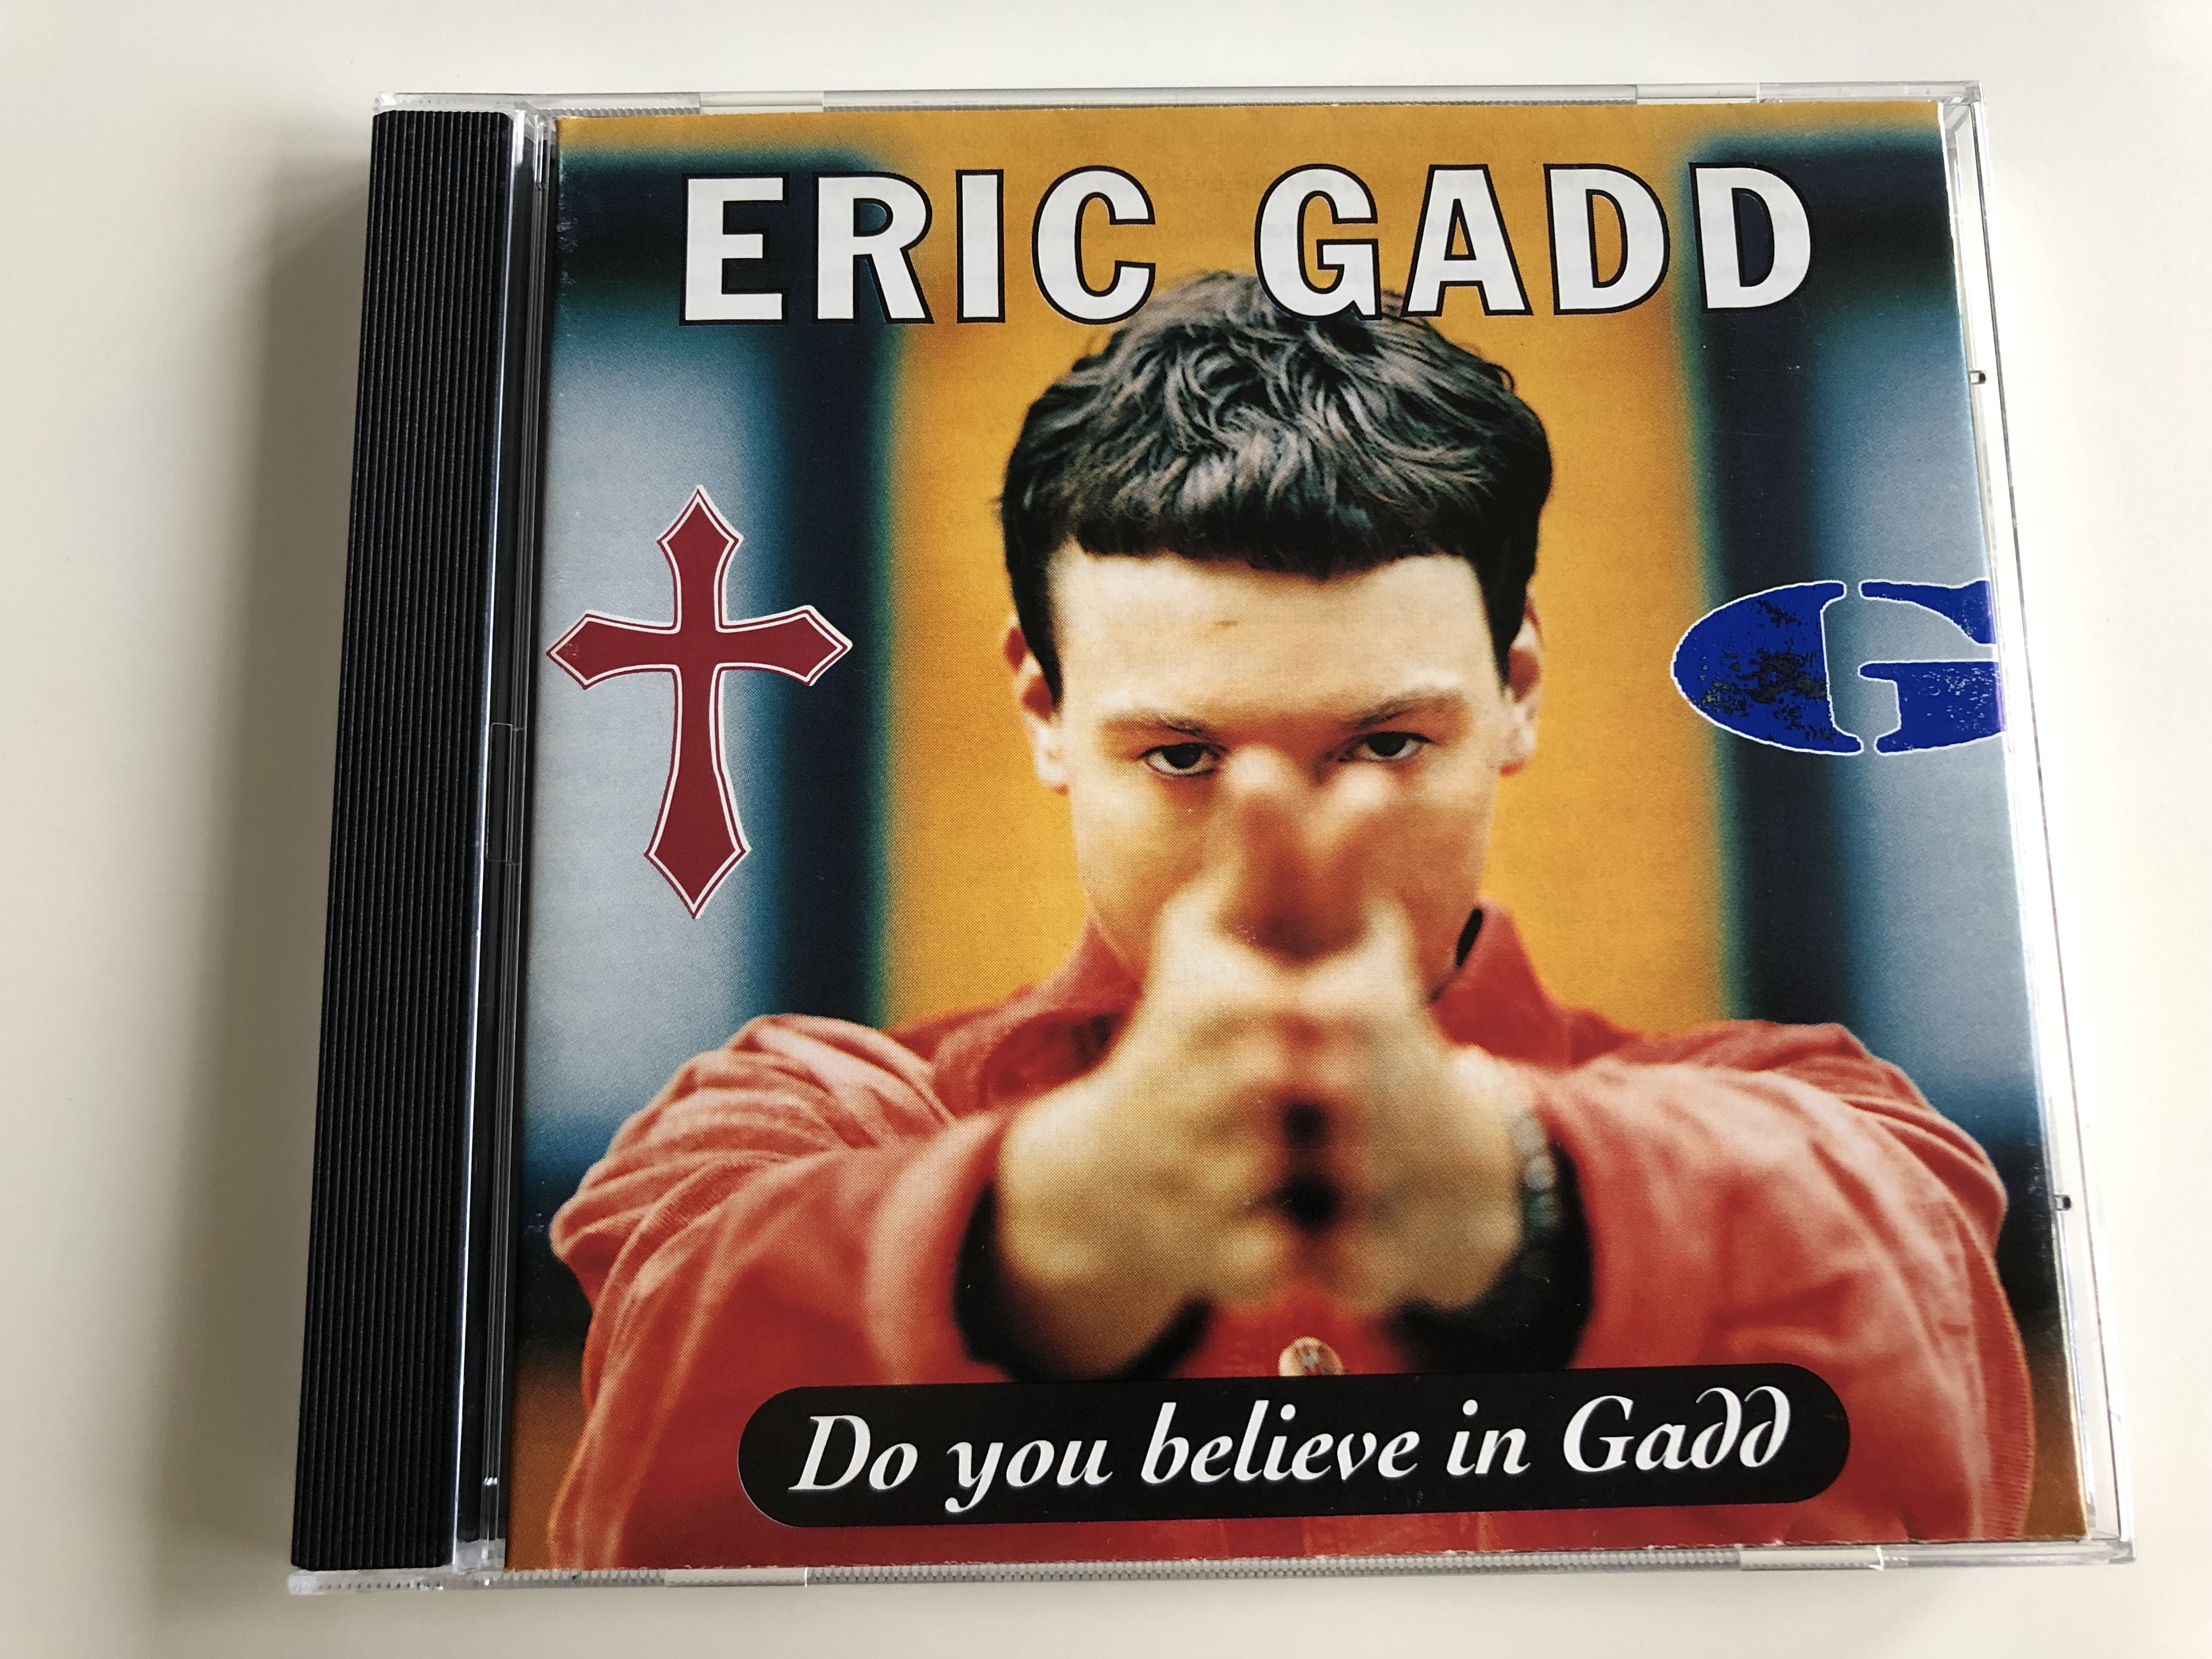 eric-gadd-do-you-believe-in-gadd-do-you-believe-in-me-ask-me-trouble-hallelujah-power-of-music-on-display-audio-cd-1994-wea-4509-96777-2-1-.jpg